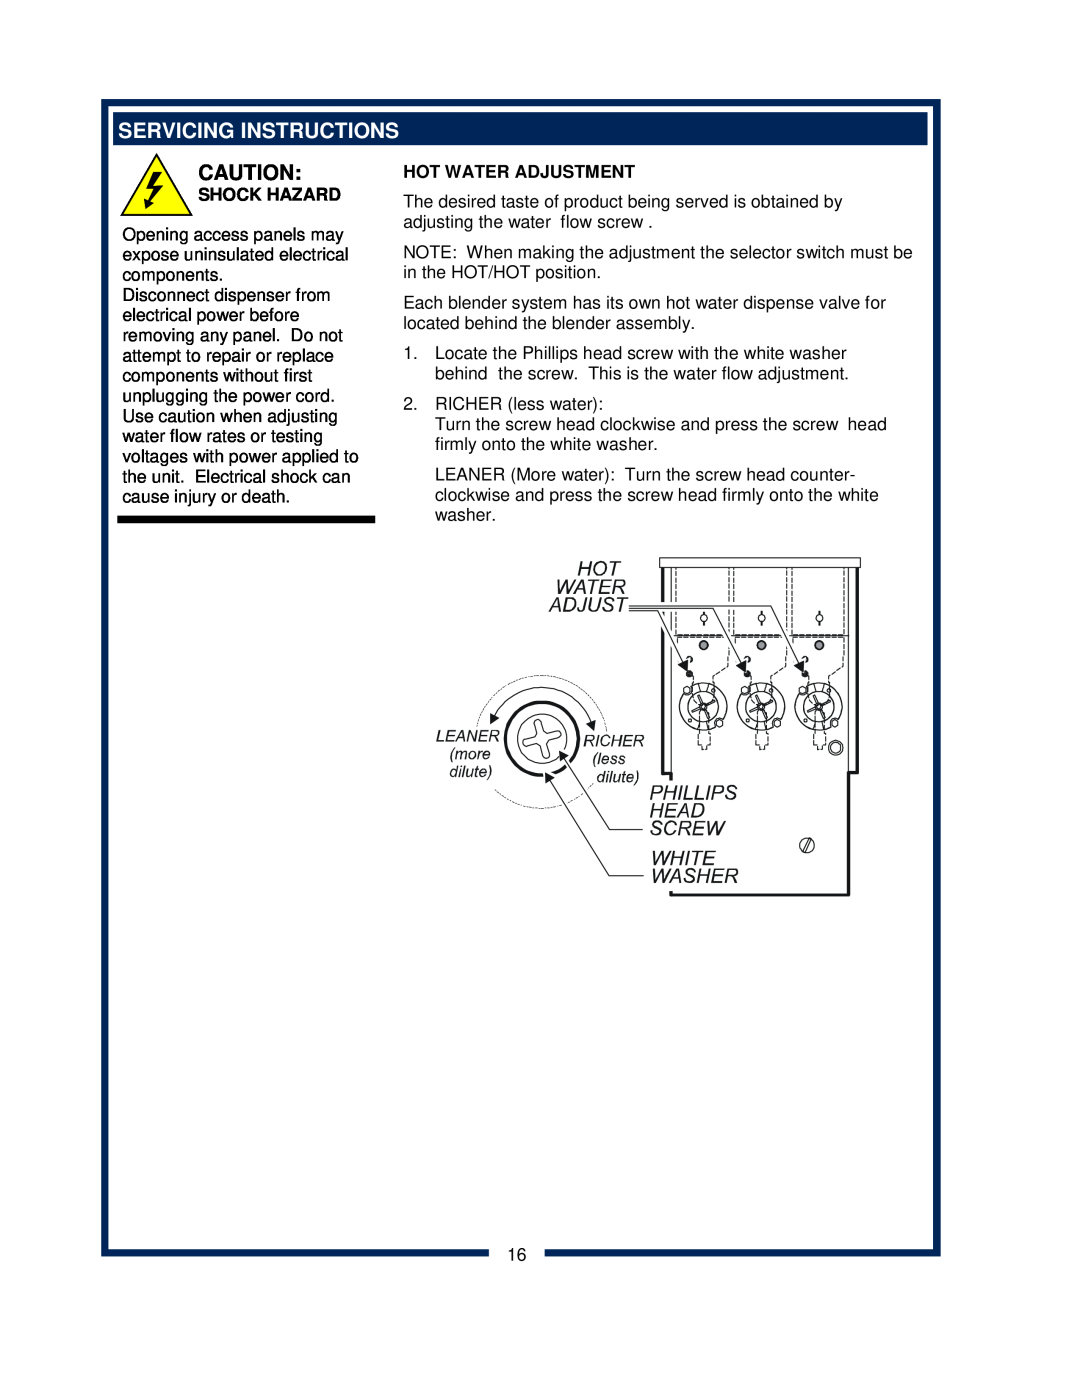 Bloomfield 9454, 9456 owner manual Servicing Instructions, Shock Hazard, Hot Water Adjustment 